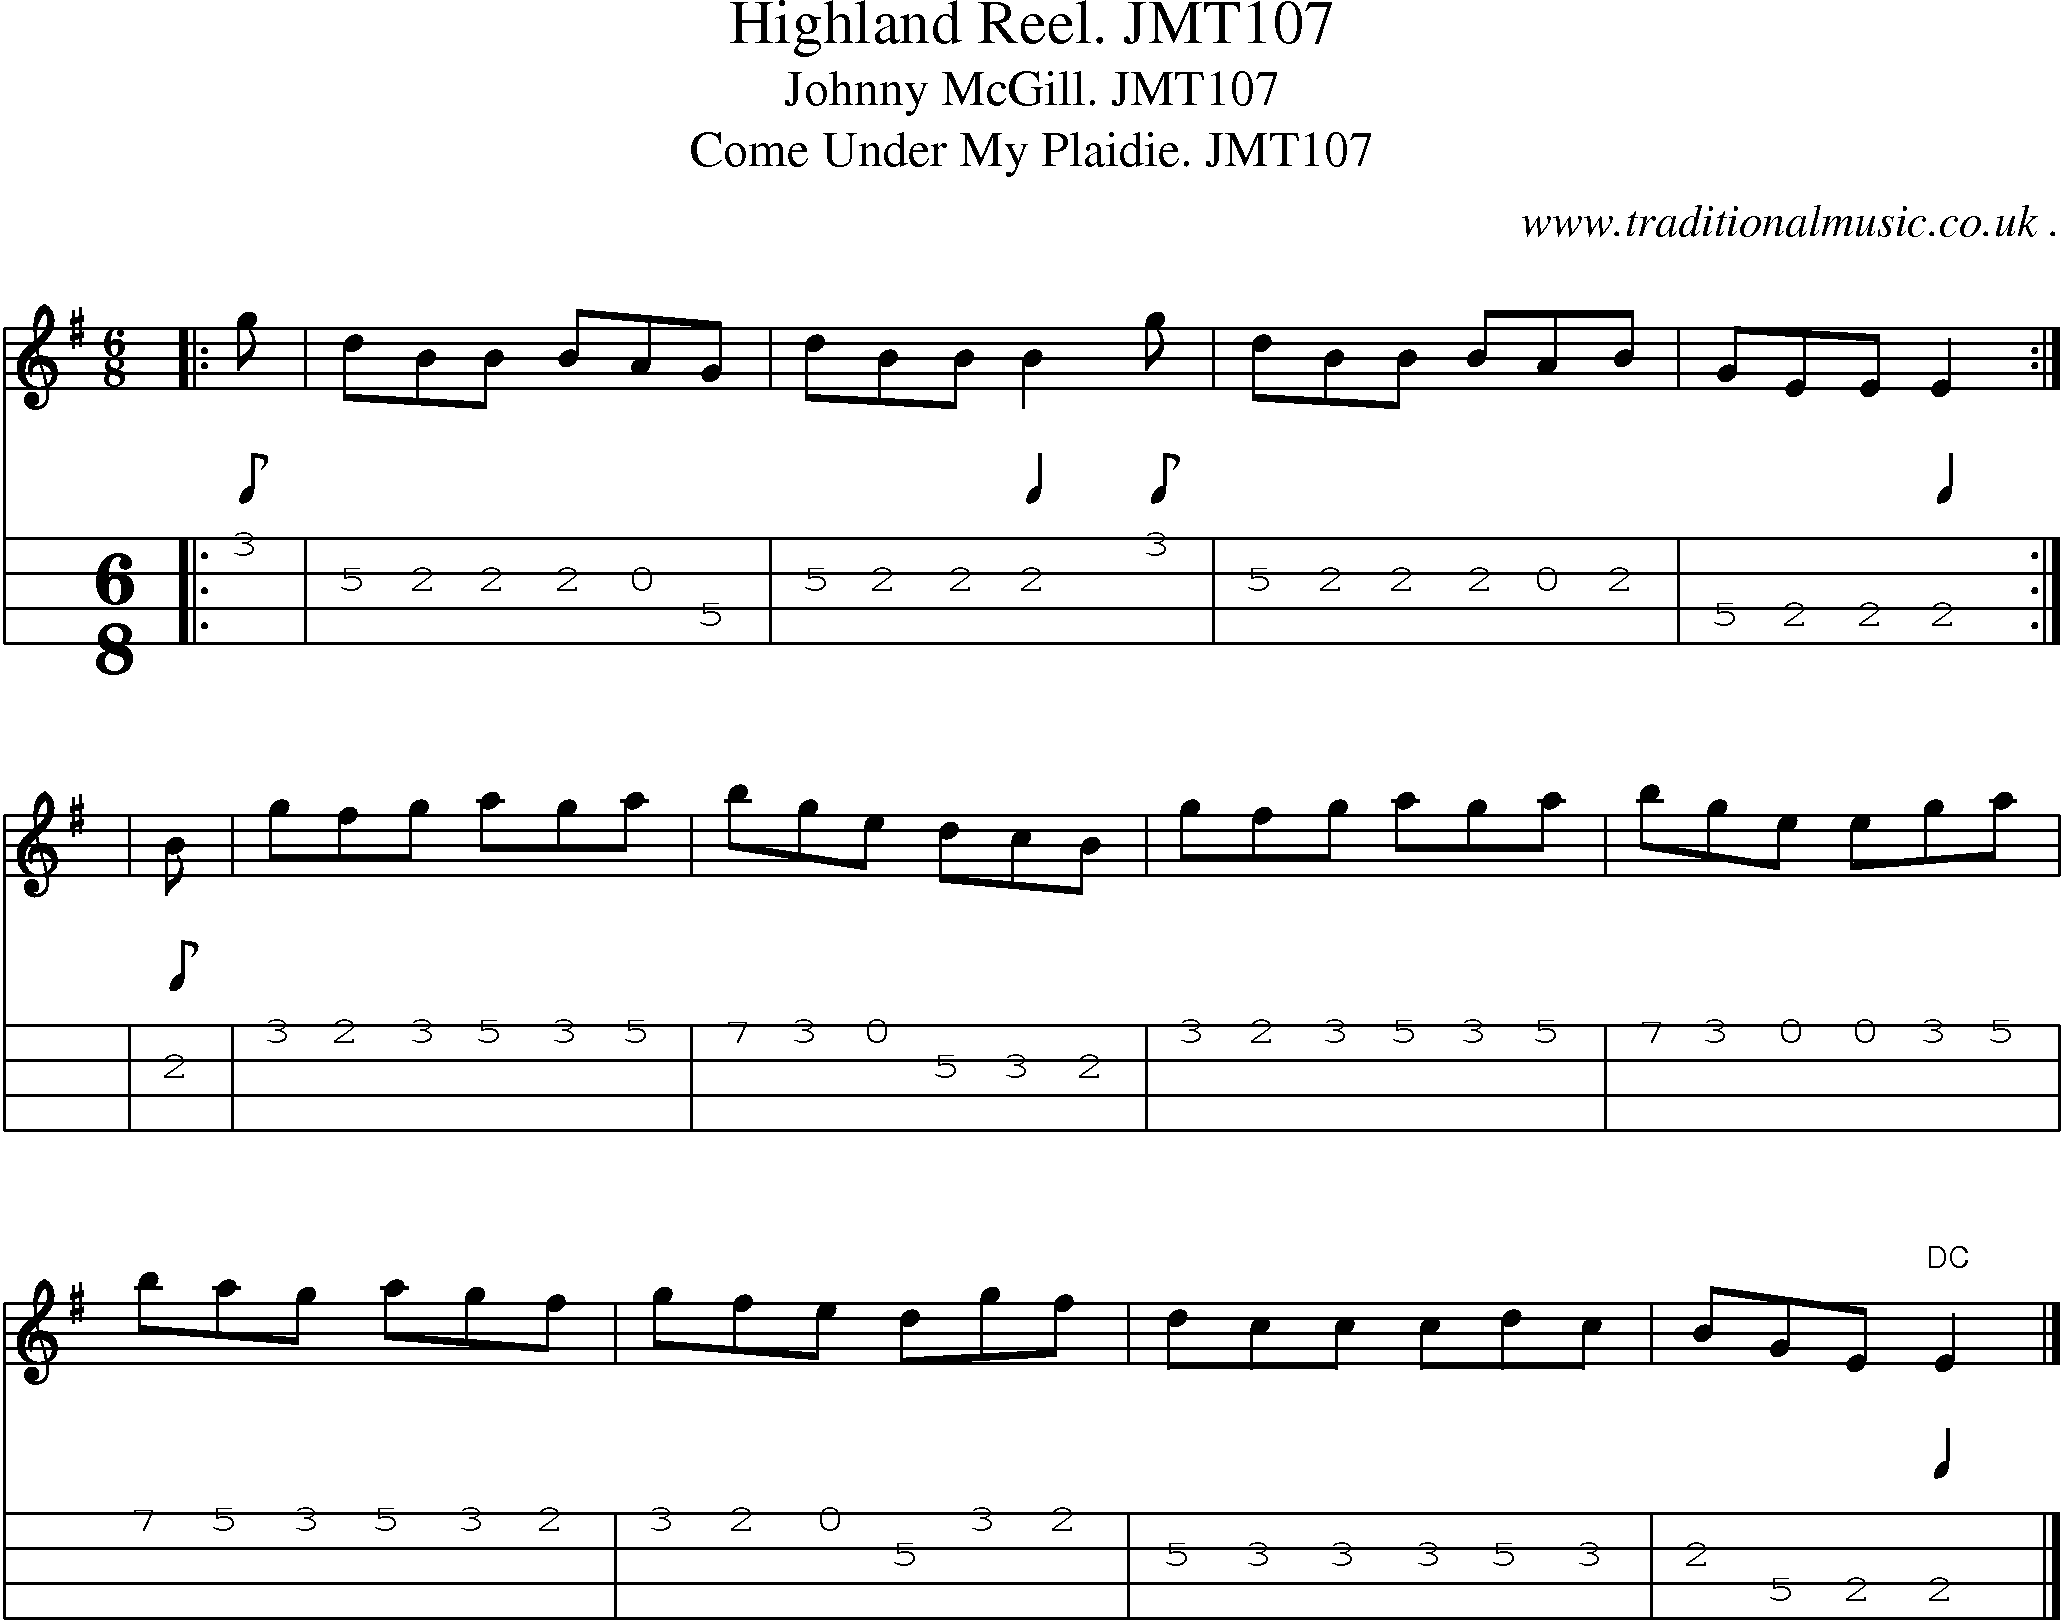 Sheet-music  score, Chords and Mandolin Tabs for Highland Reel Jmt107